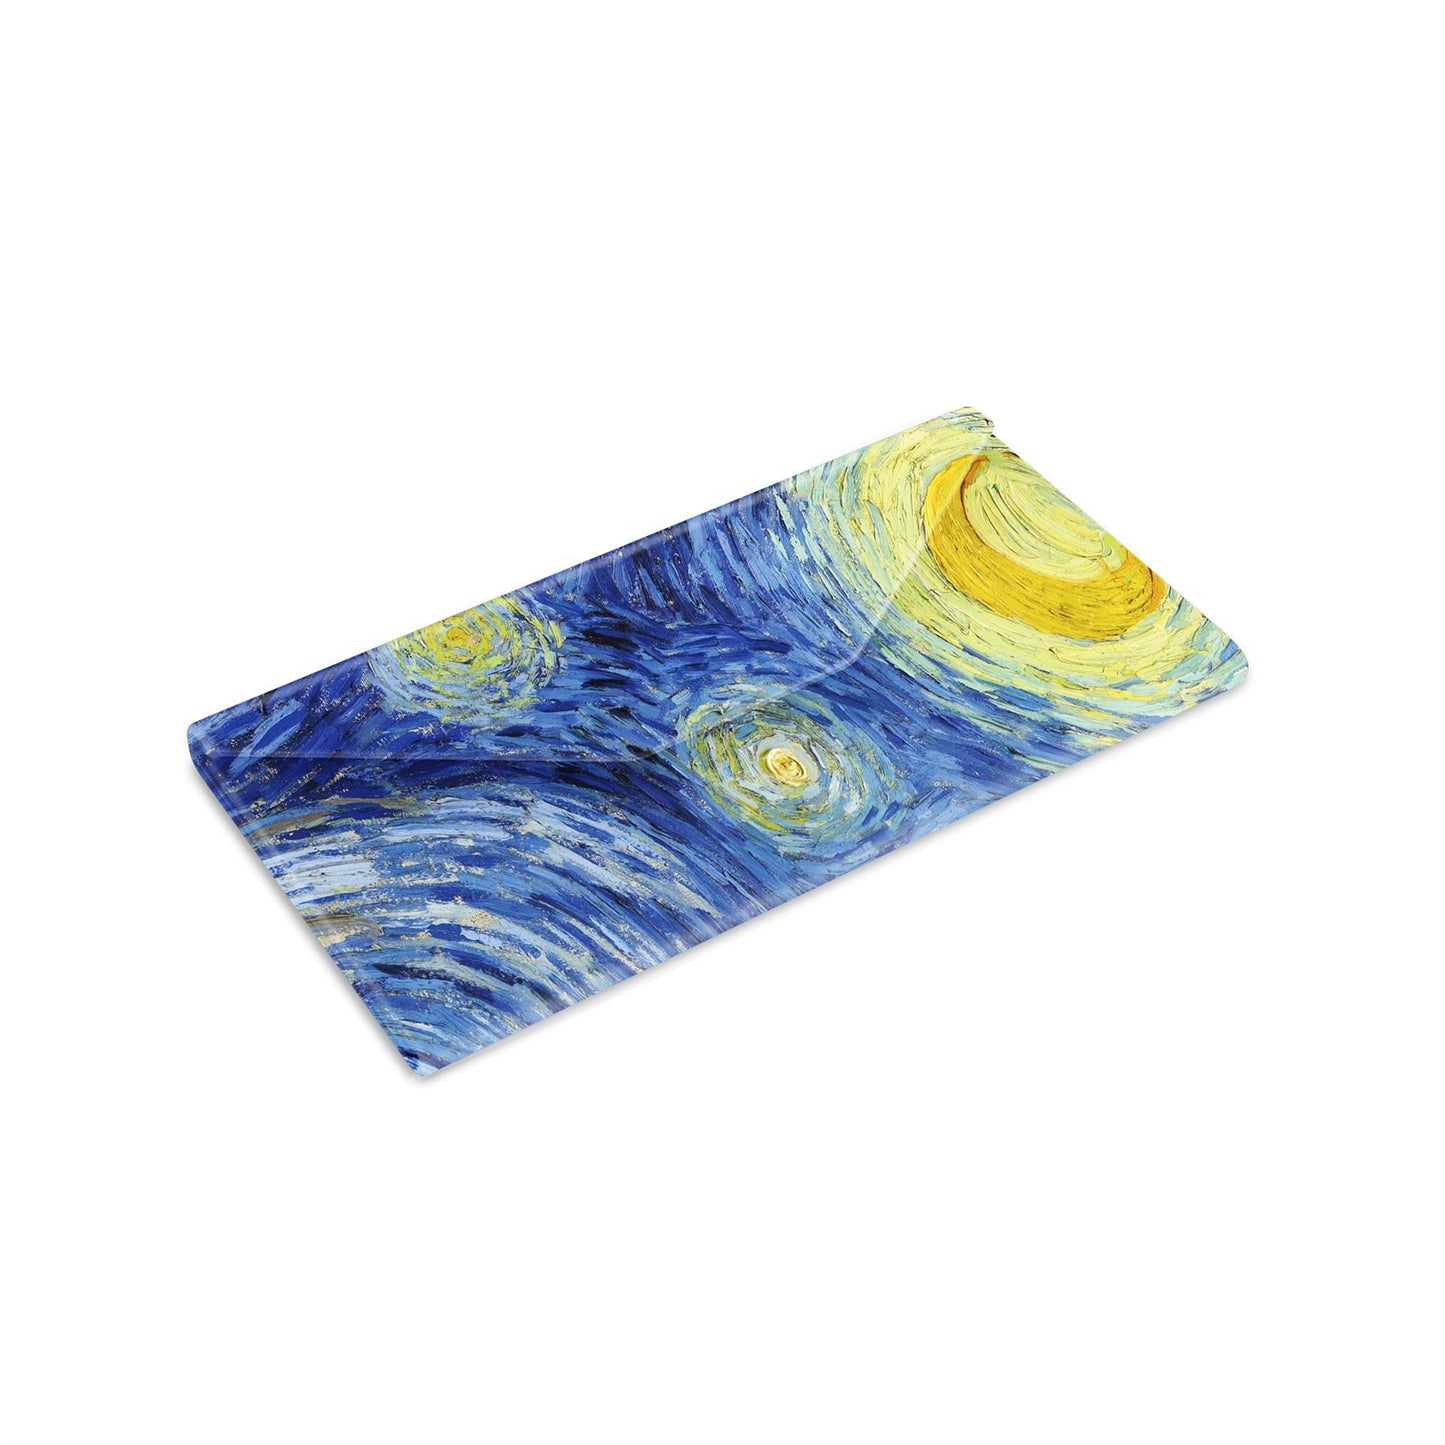 Vincent van Gogh "Starry Night" Eyeglasses Case + Microfiber Lens Cloth